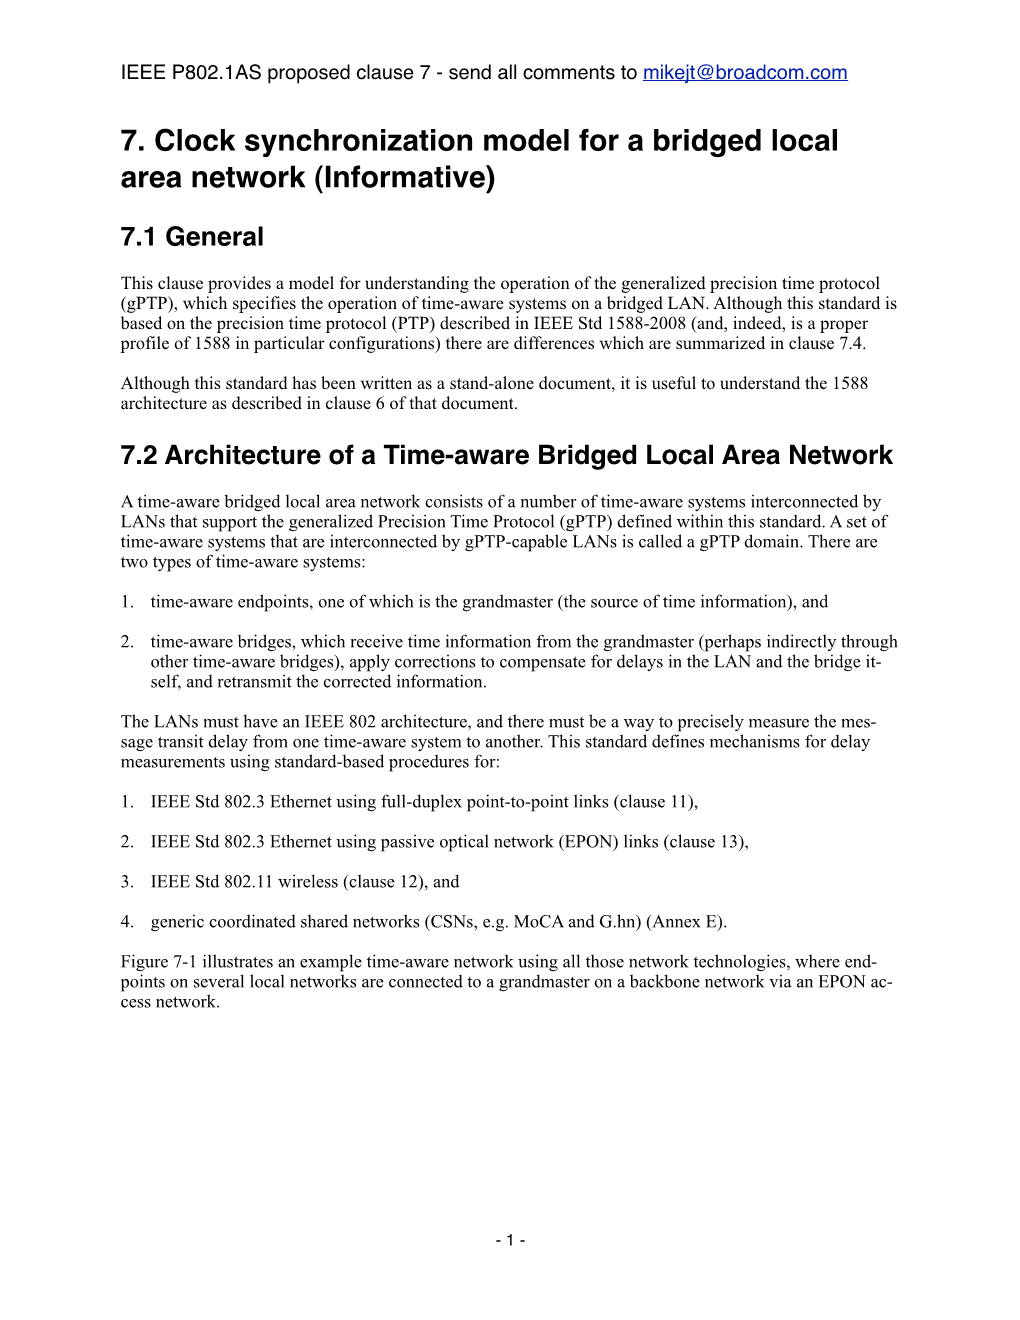 7. Clock Synchronization Model for a Bridged Local Area Network (Informative)